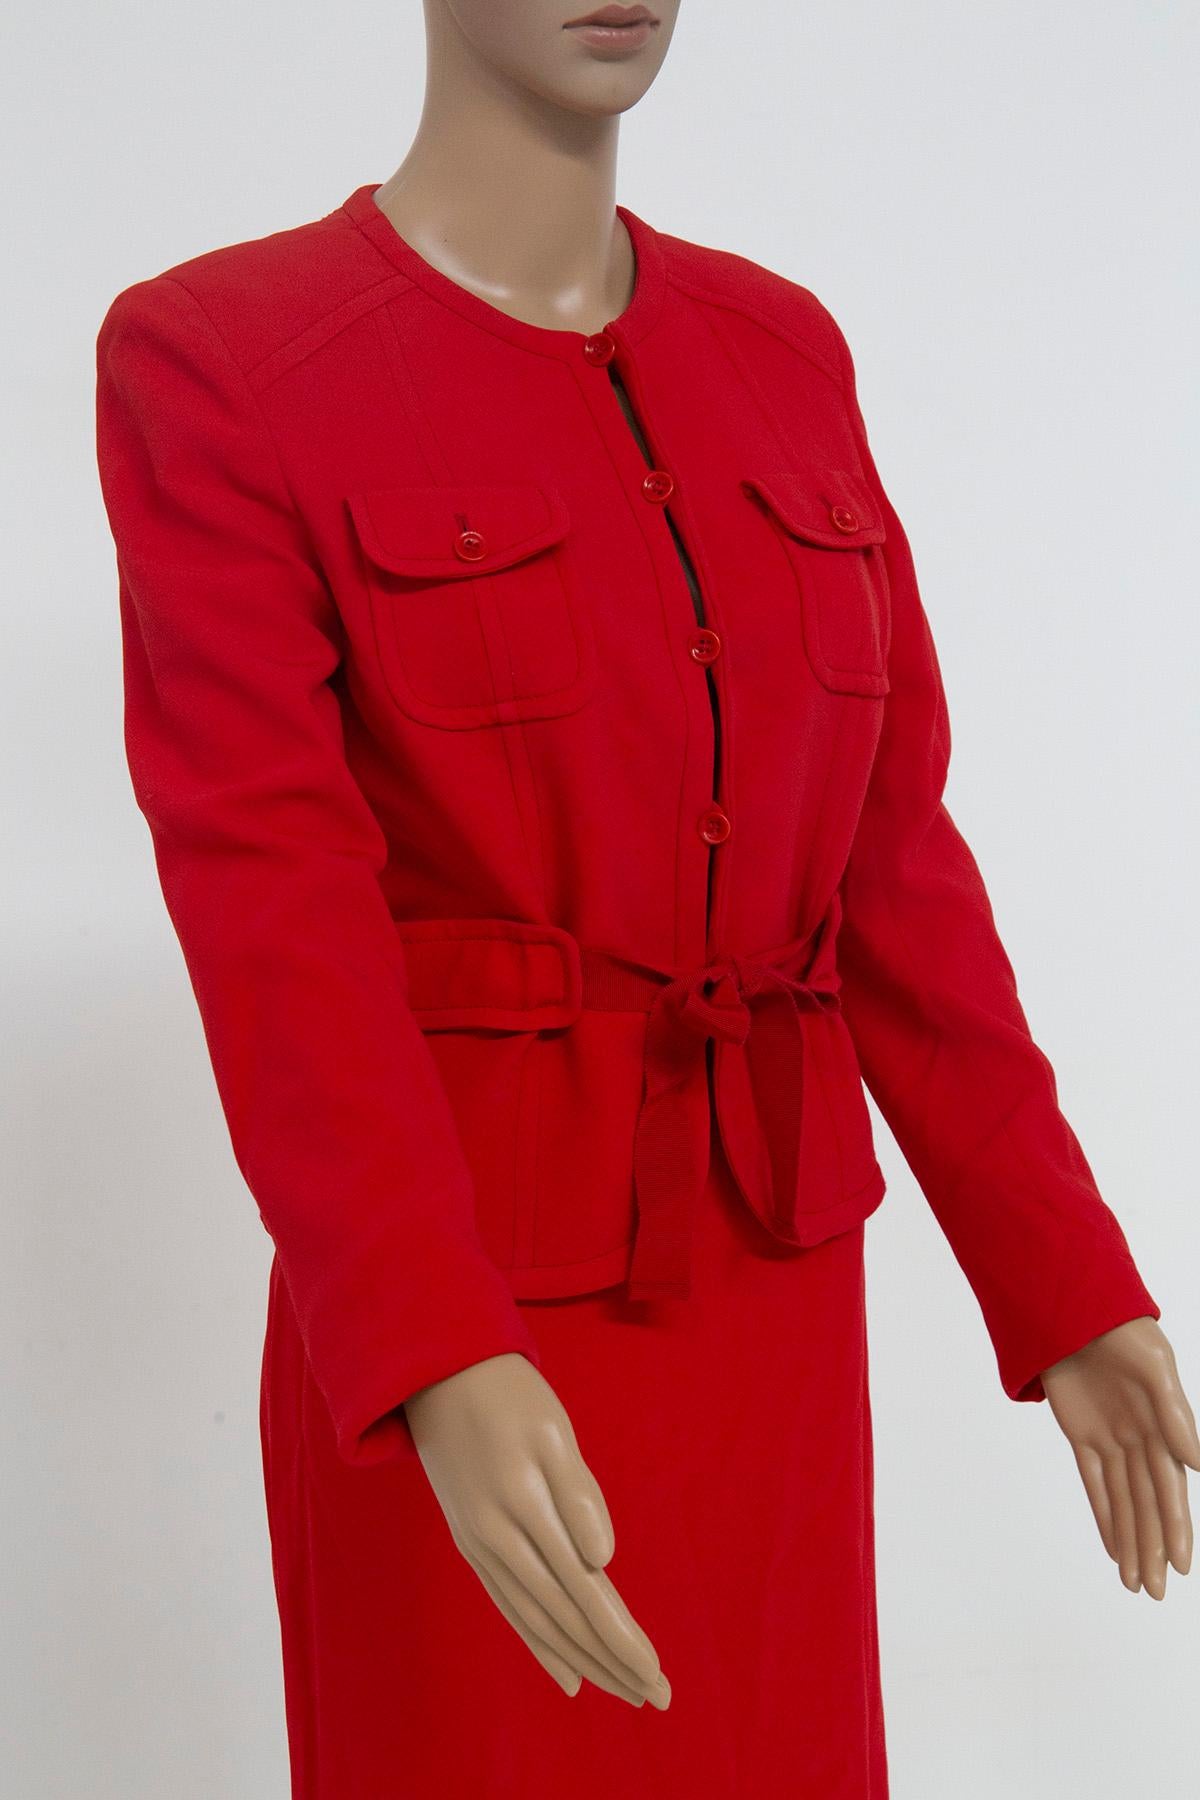 Women's Valentino Garavani Red suit Sheath Dresses 1990 For Sale